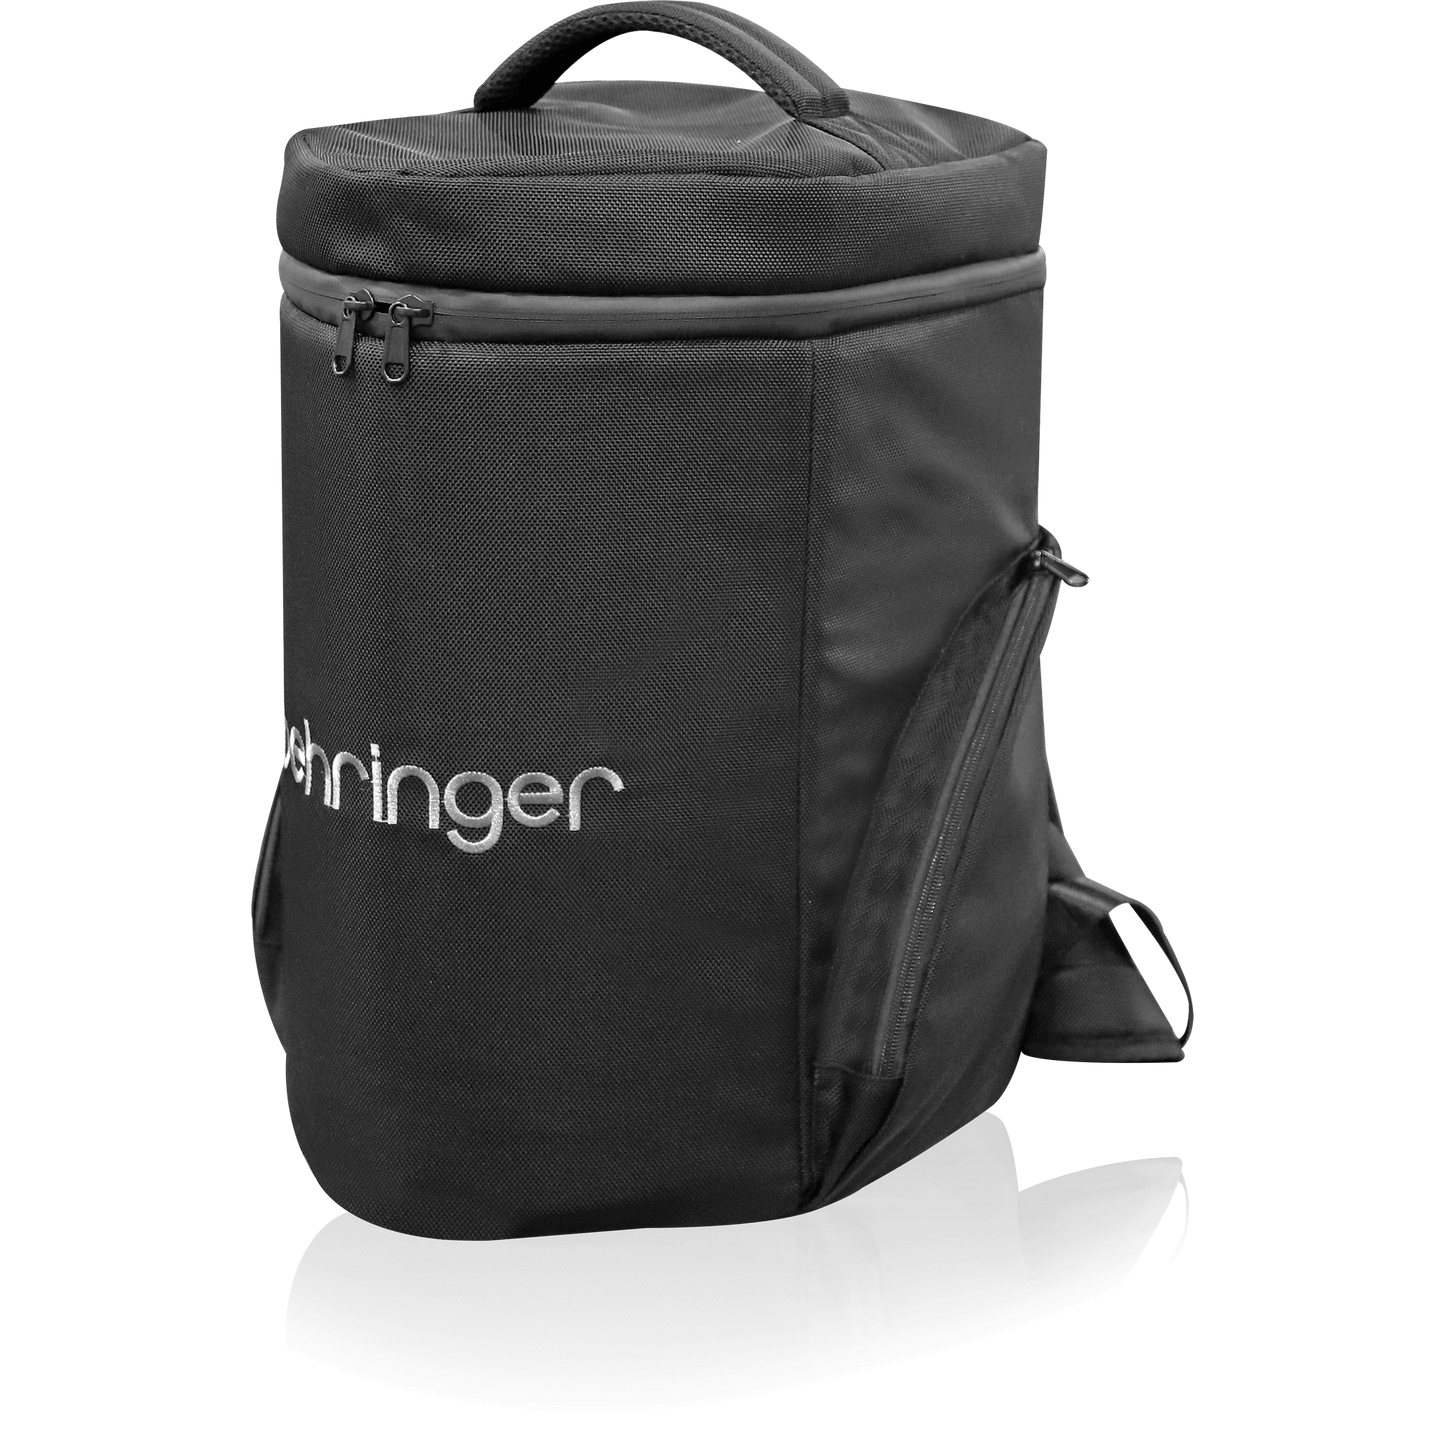 Behringer B1BACKPACK  Backpack for B1C & B1X with Durable Nylon Shell Black